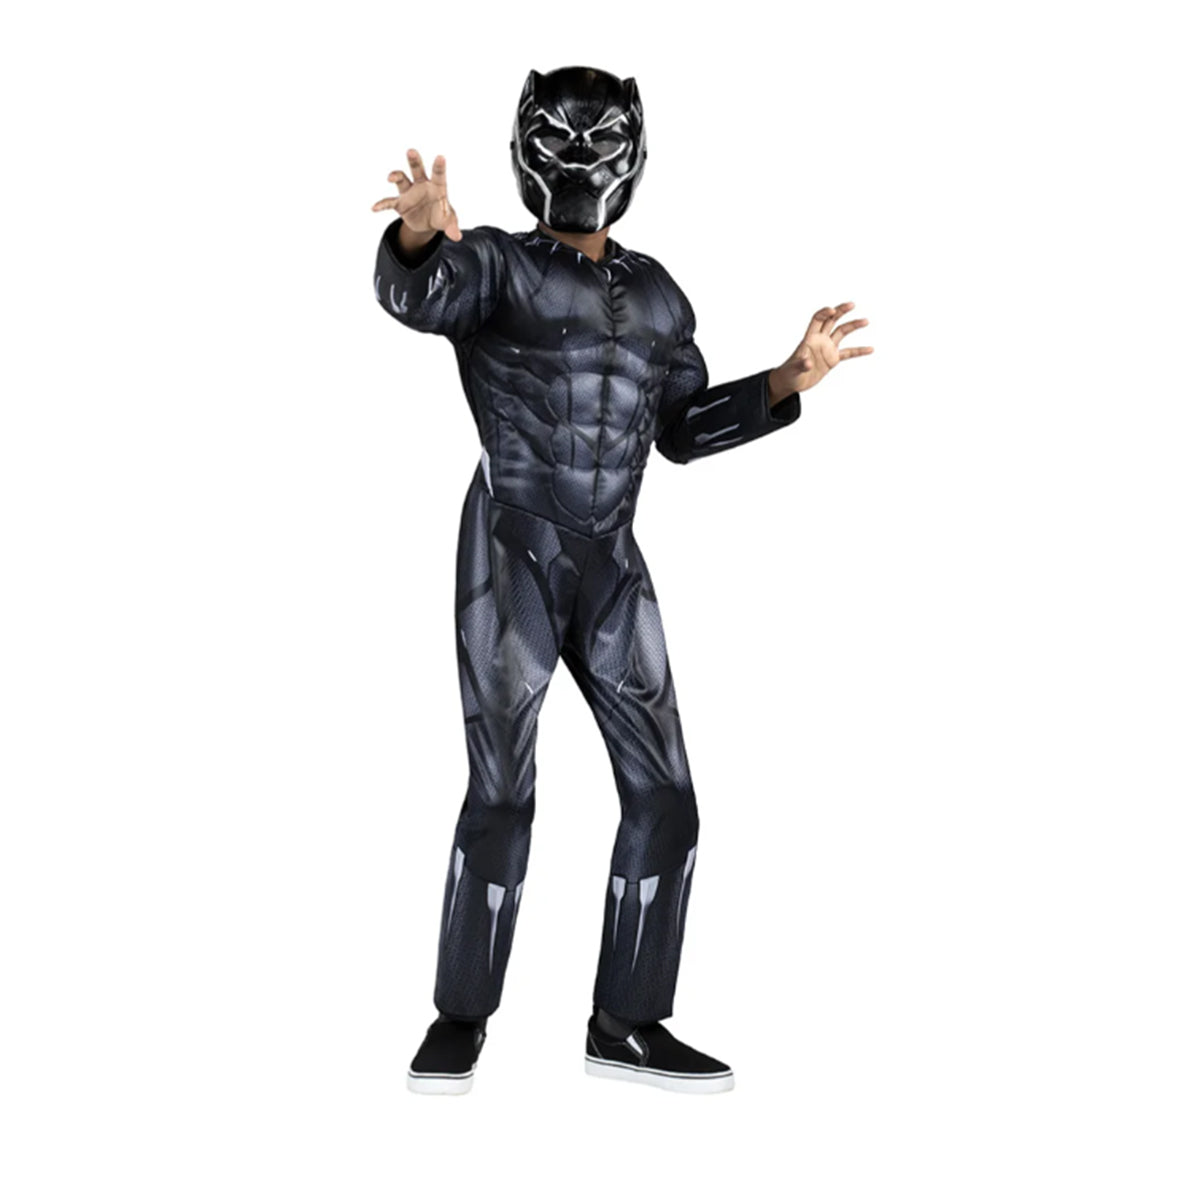 KROEGER Costumes Marvel Avengers Black Panther Costume for Kids, Black Padded Jumpsuit